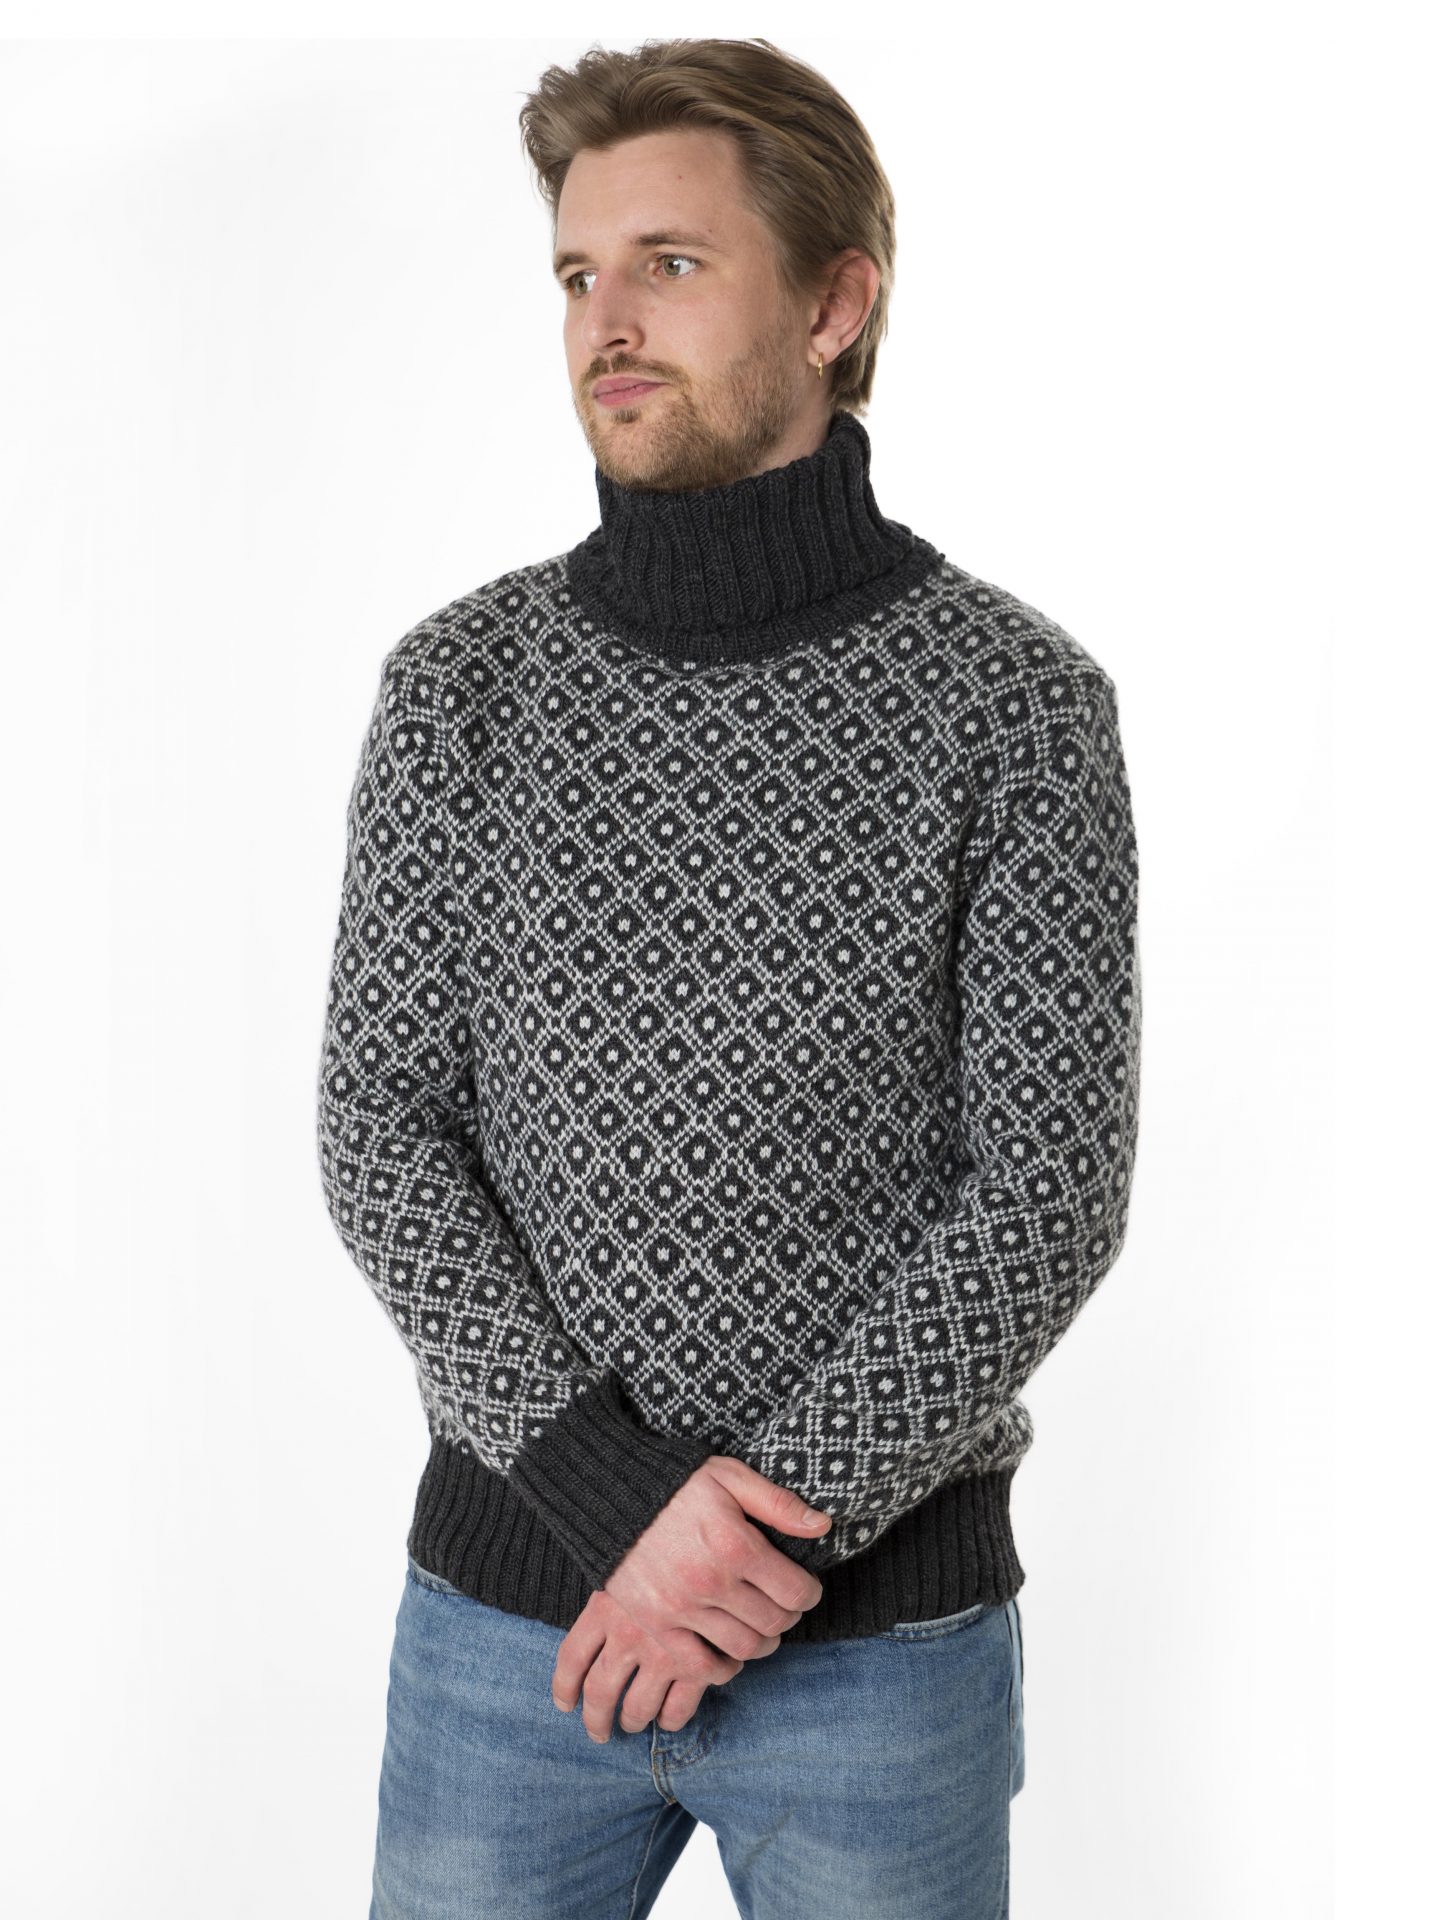 Maglione LEO dolcevita stile scandinavo da uomo in pura lana merino